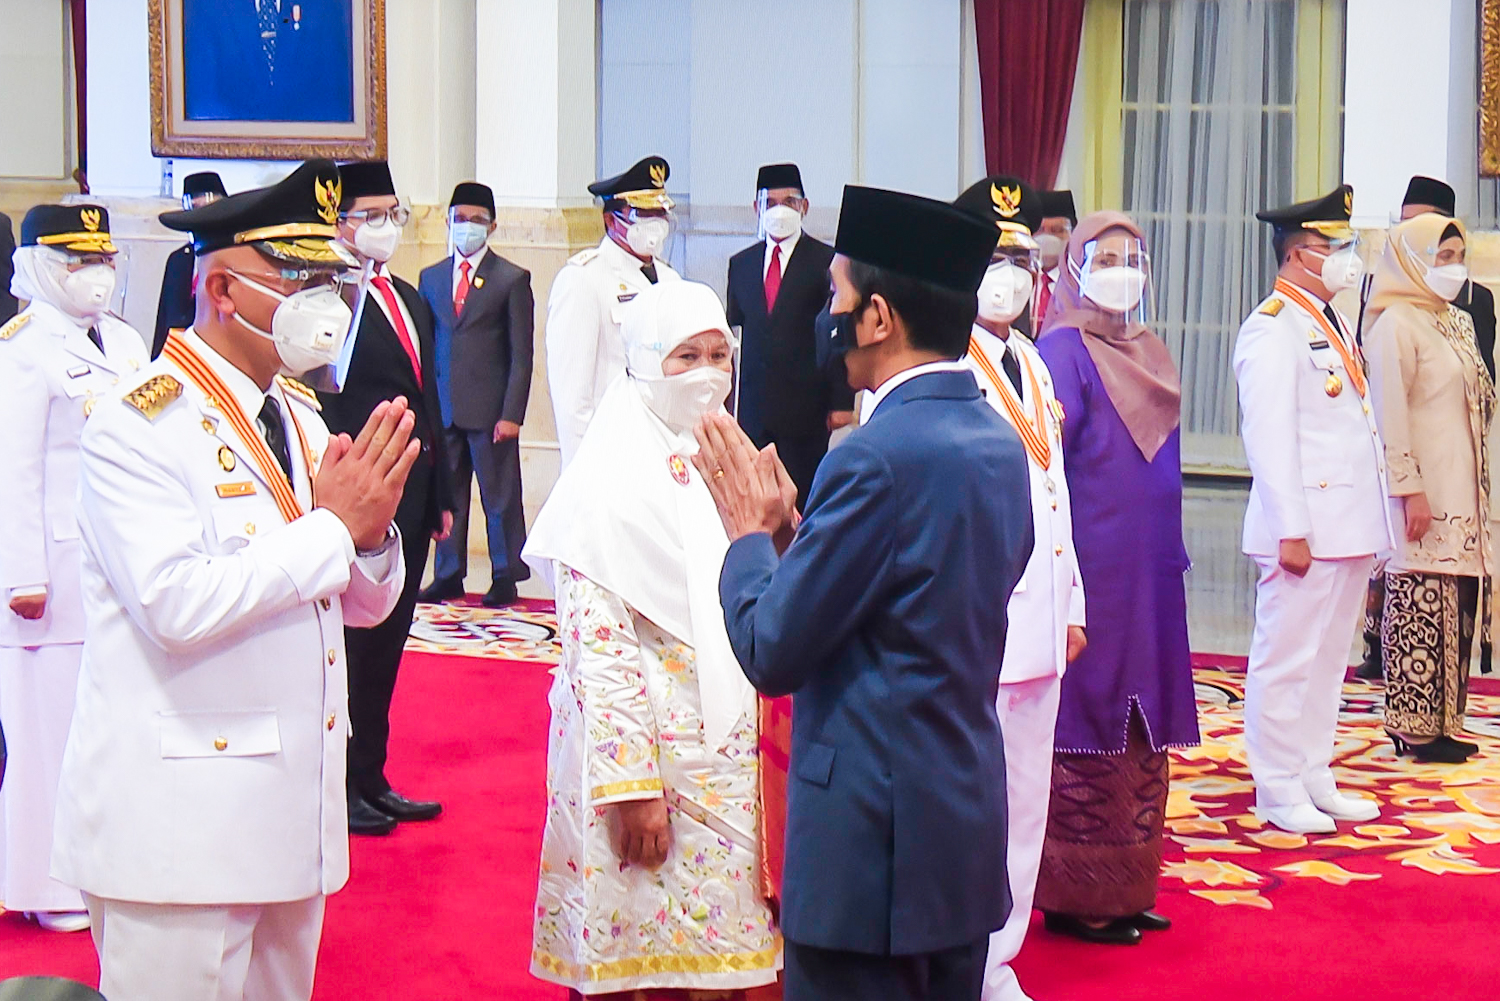 Presiden Lantik Gubernur Sumbar, Kepri, dan Bengkulu